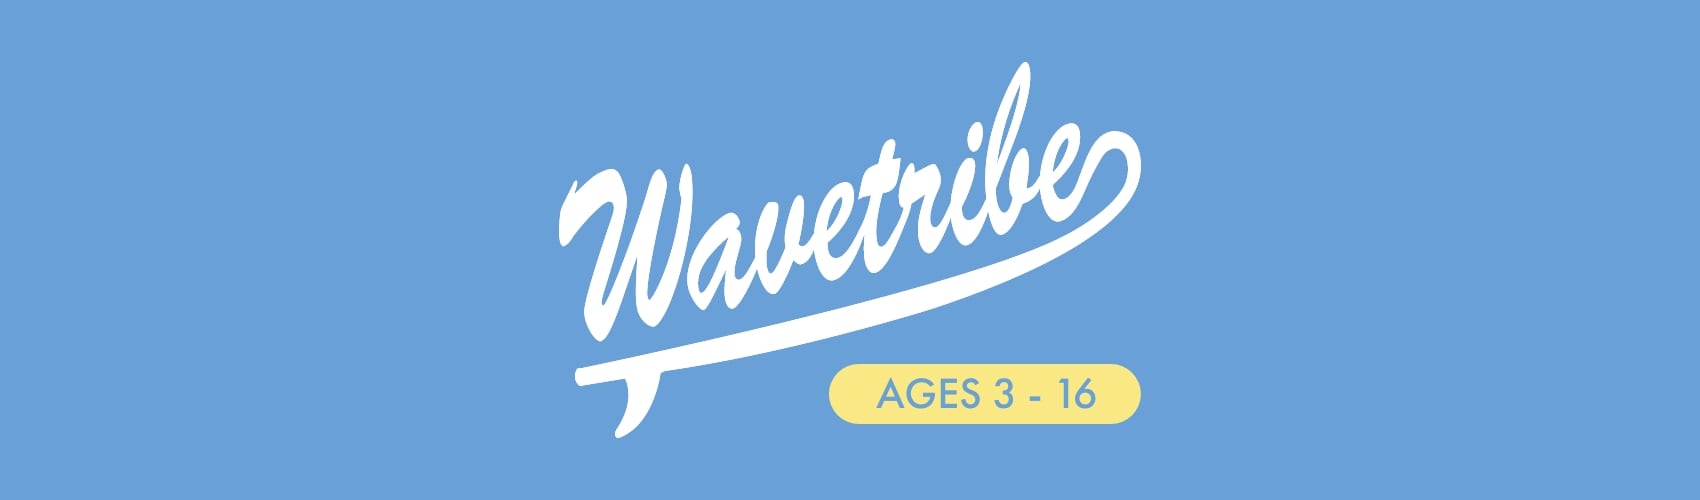 WaveTribe Kids' Clothing